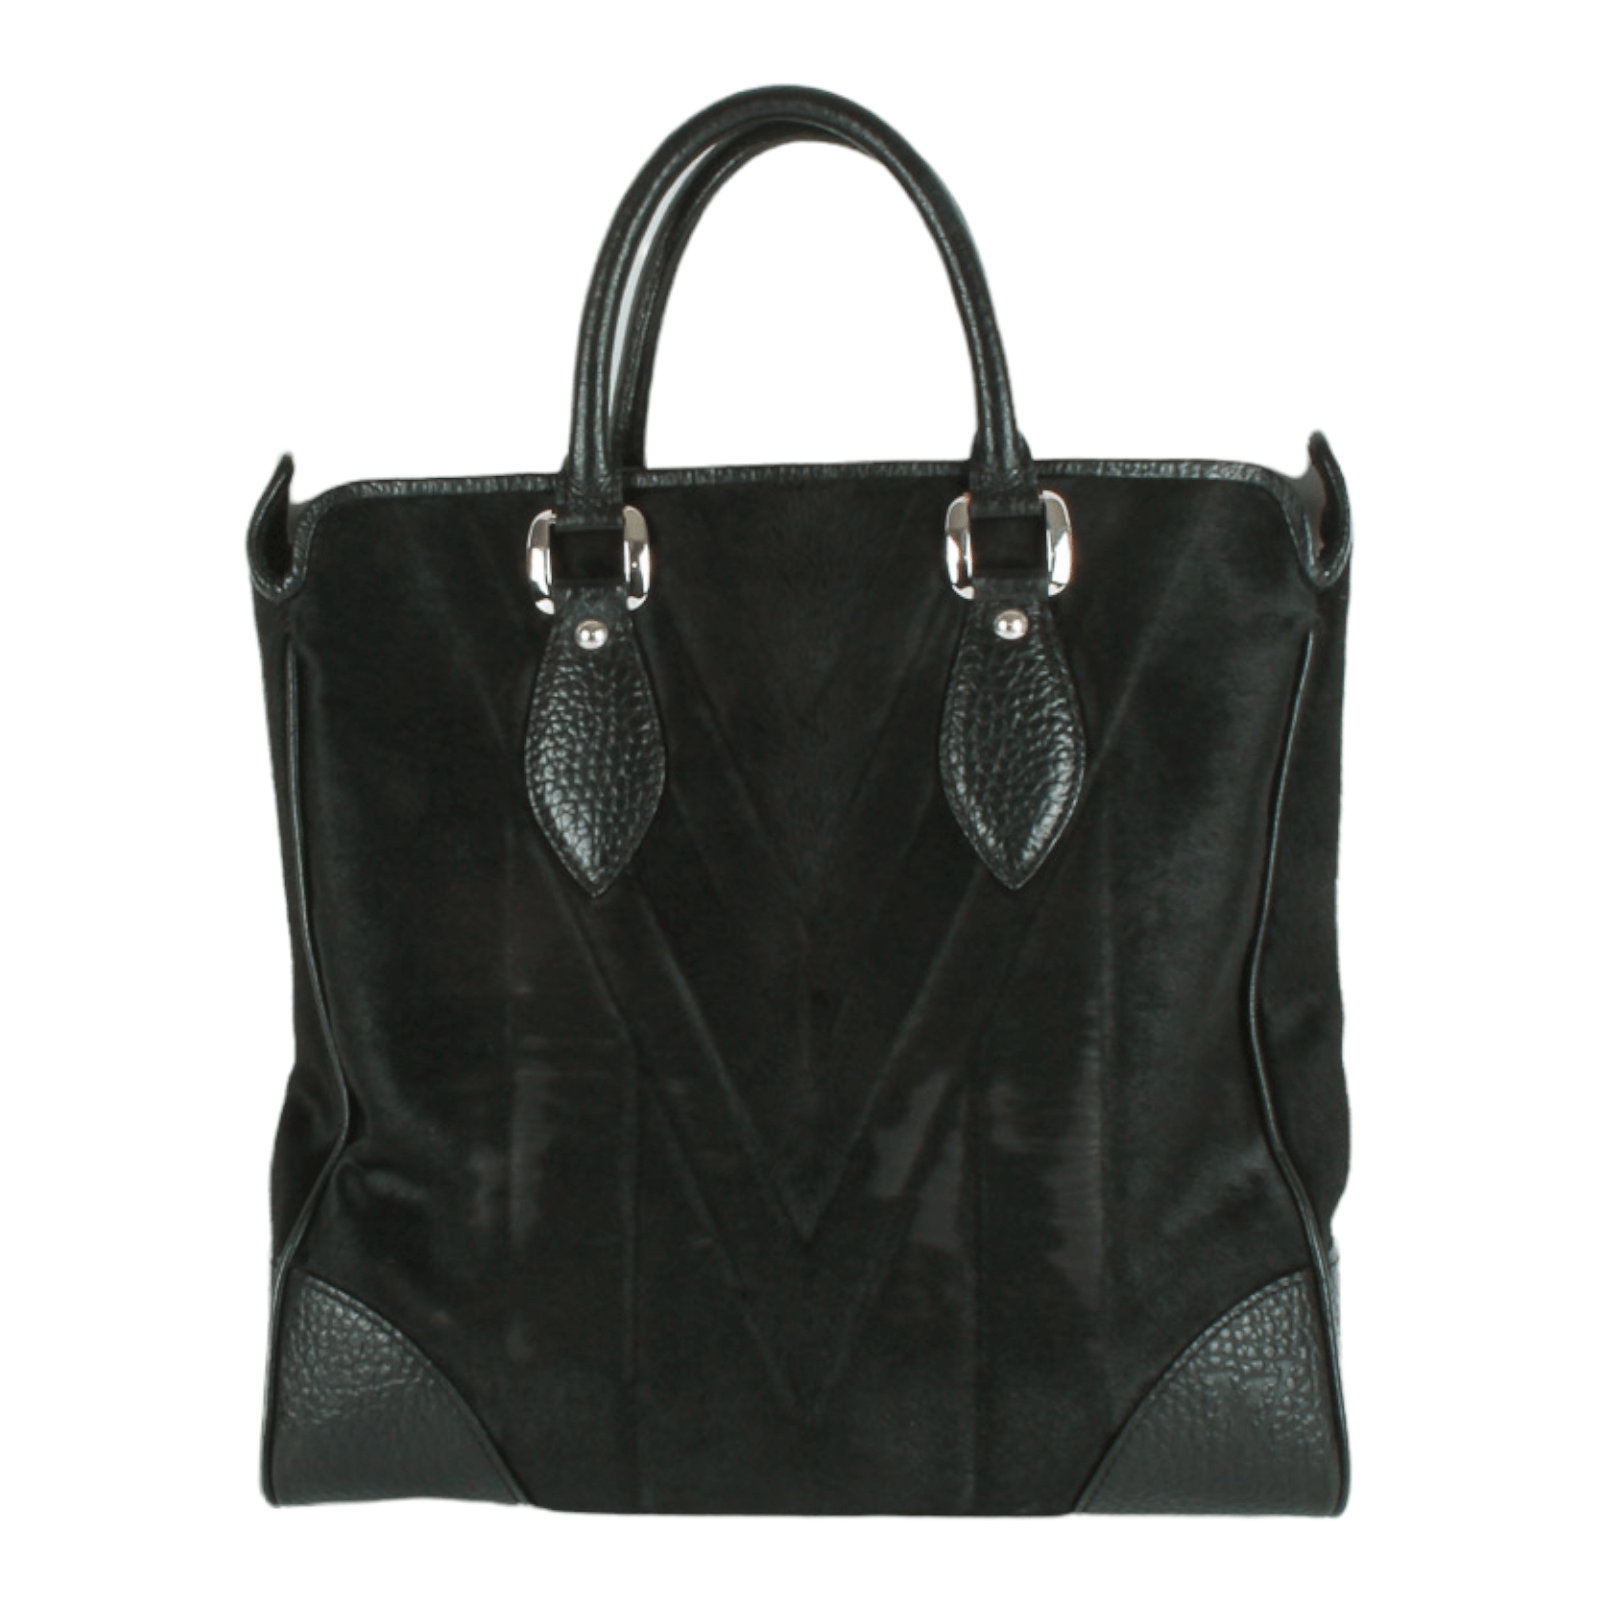 Louis Vuitton Snap Large Bags & Handbags for Women